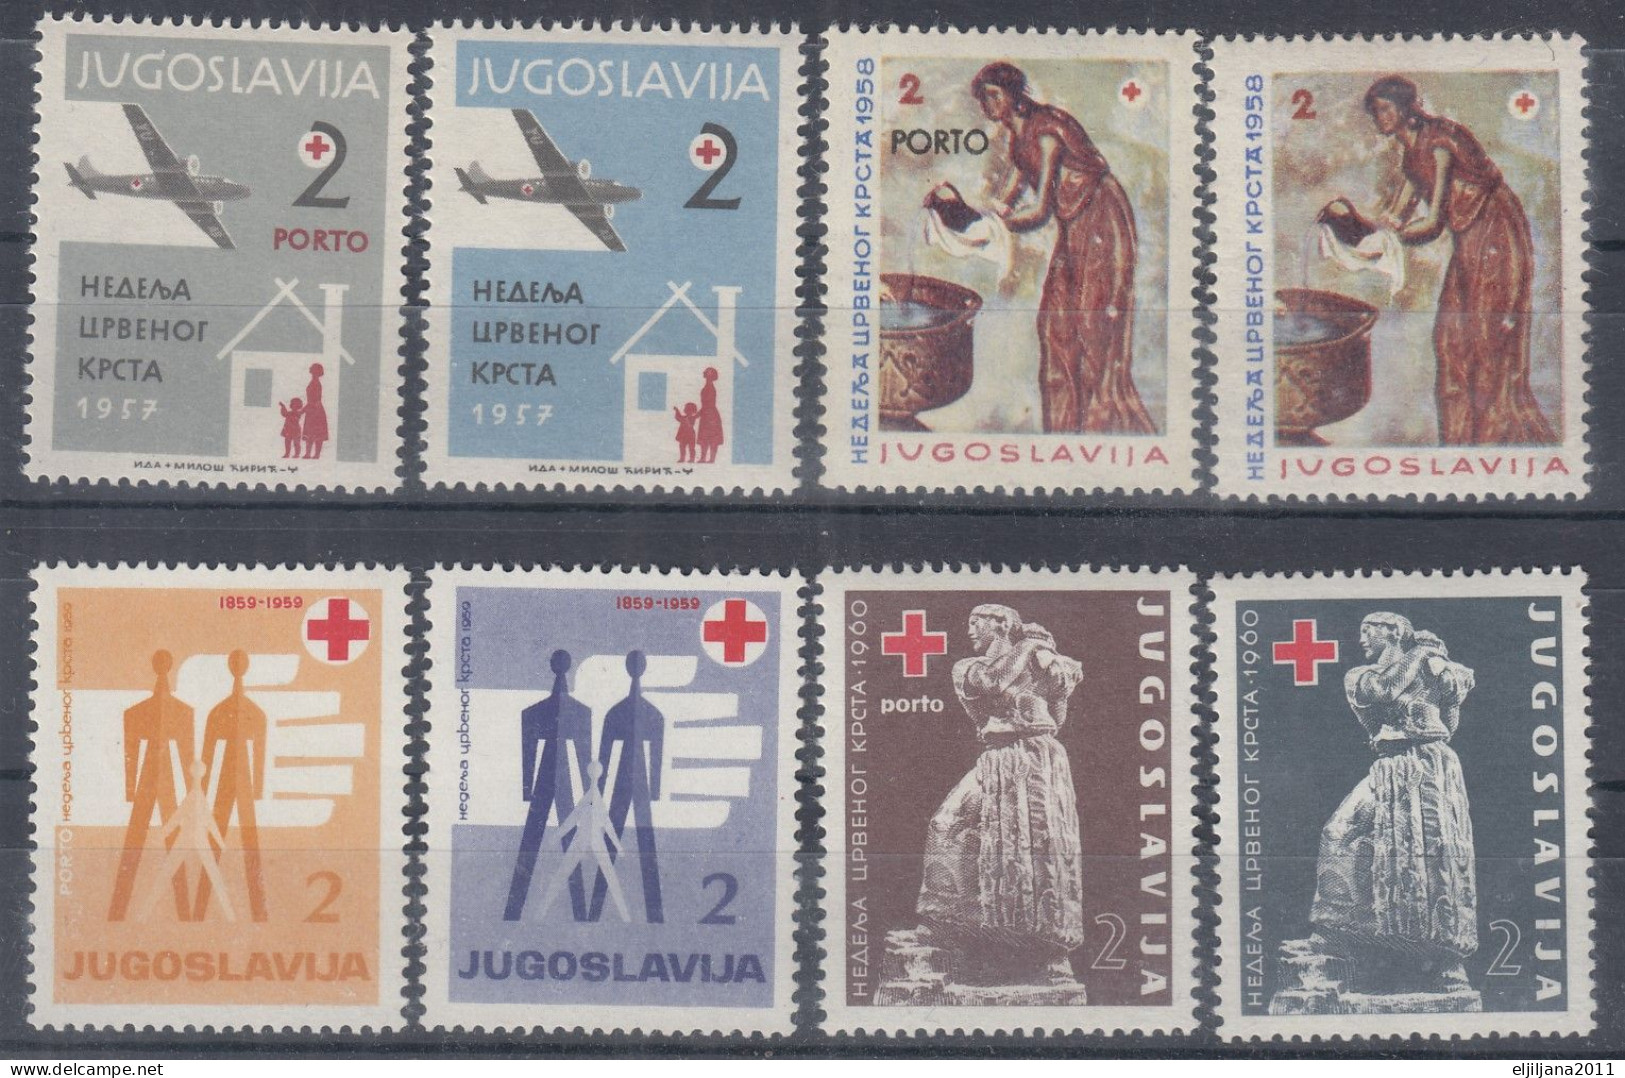 Action !! SALE !! 50 % OFF !! ⁕ Yugoslavia 1957 - 1960 ⁕ Postage Due & Red Cross ⁕ 8v MNH - Bienfaisance